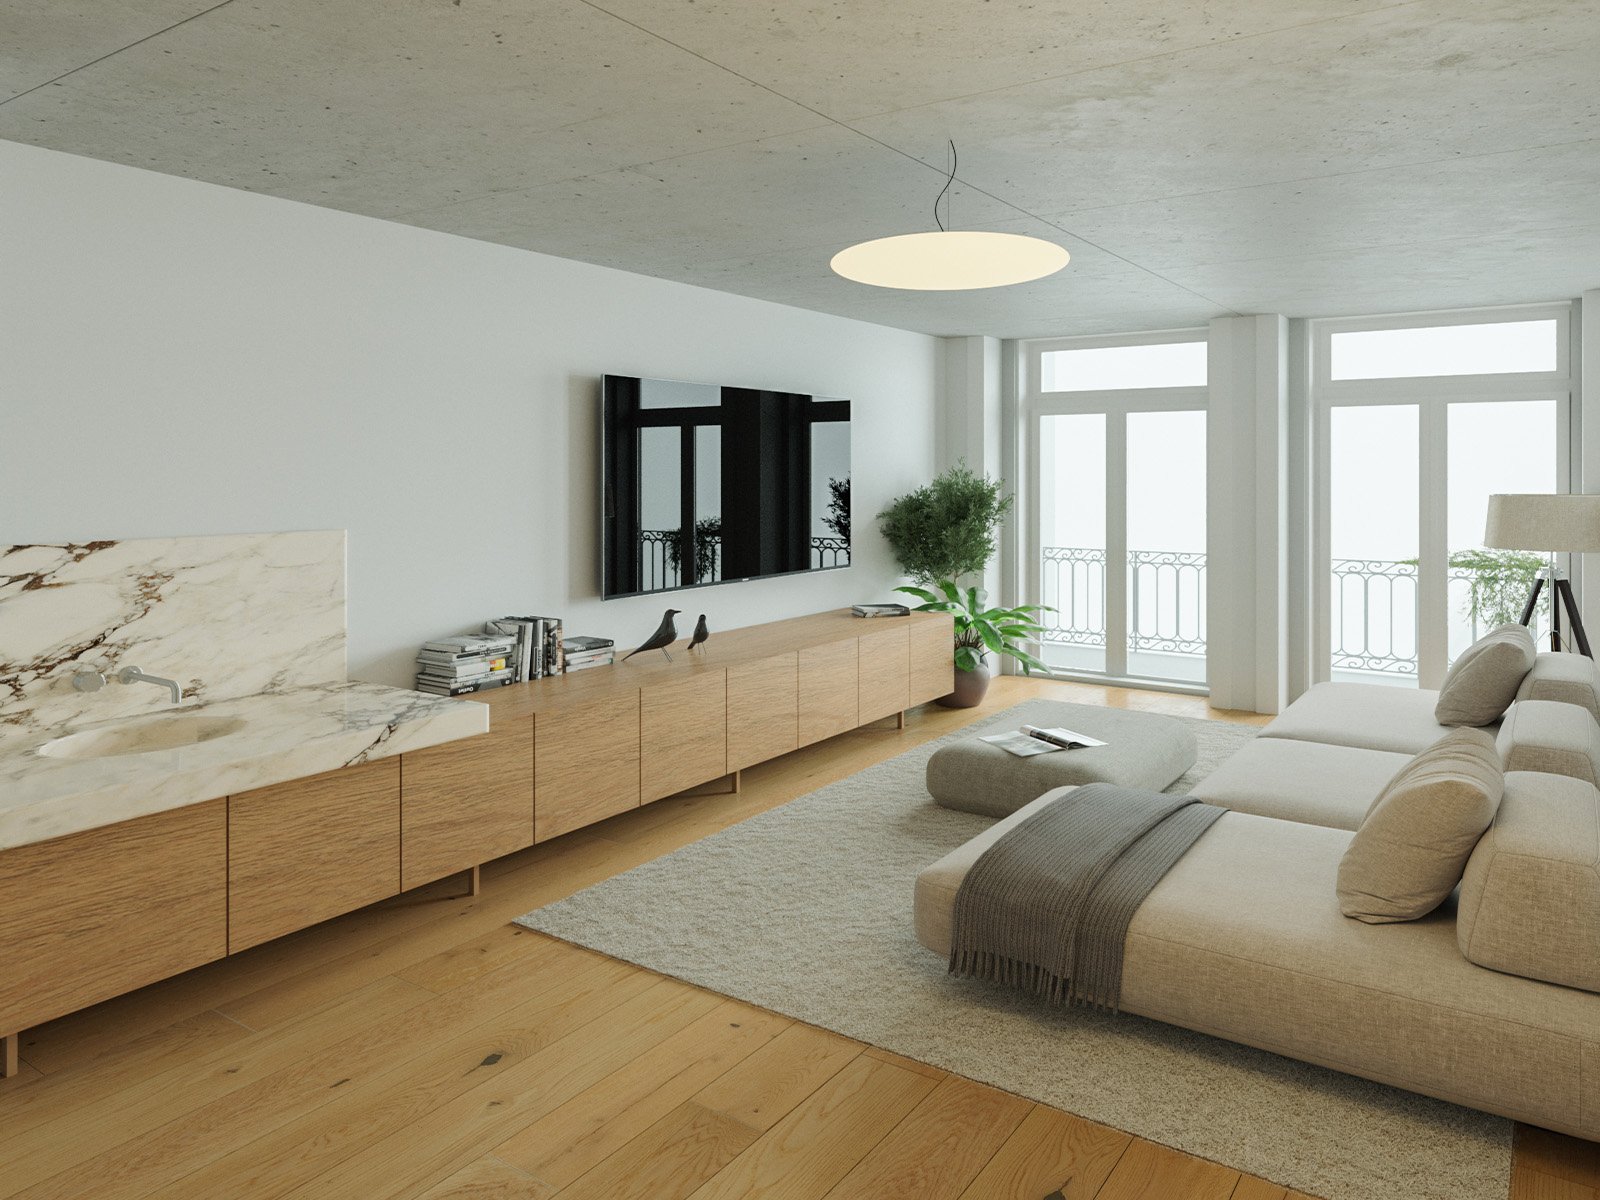 1 bedroom duplex apartment in the historic center of Porto 3191699526